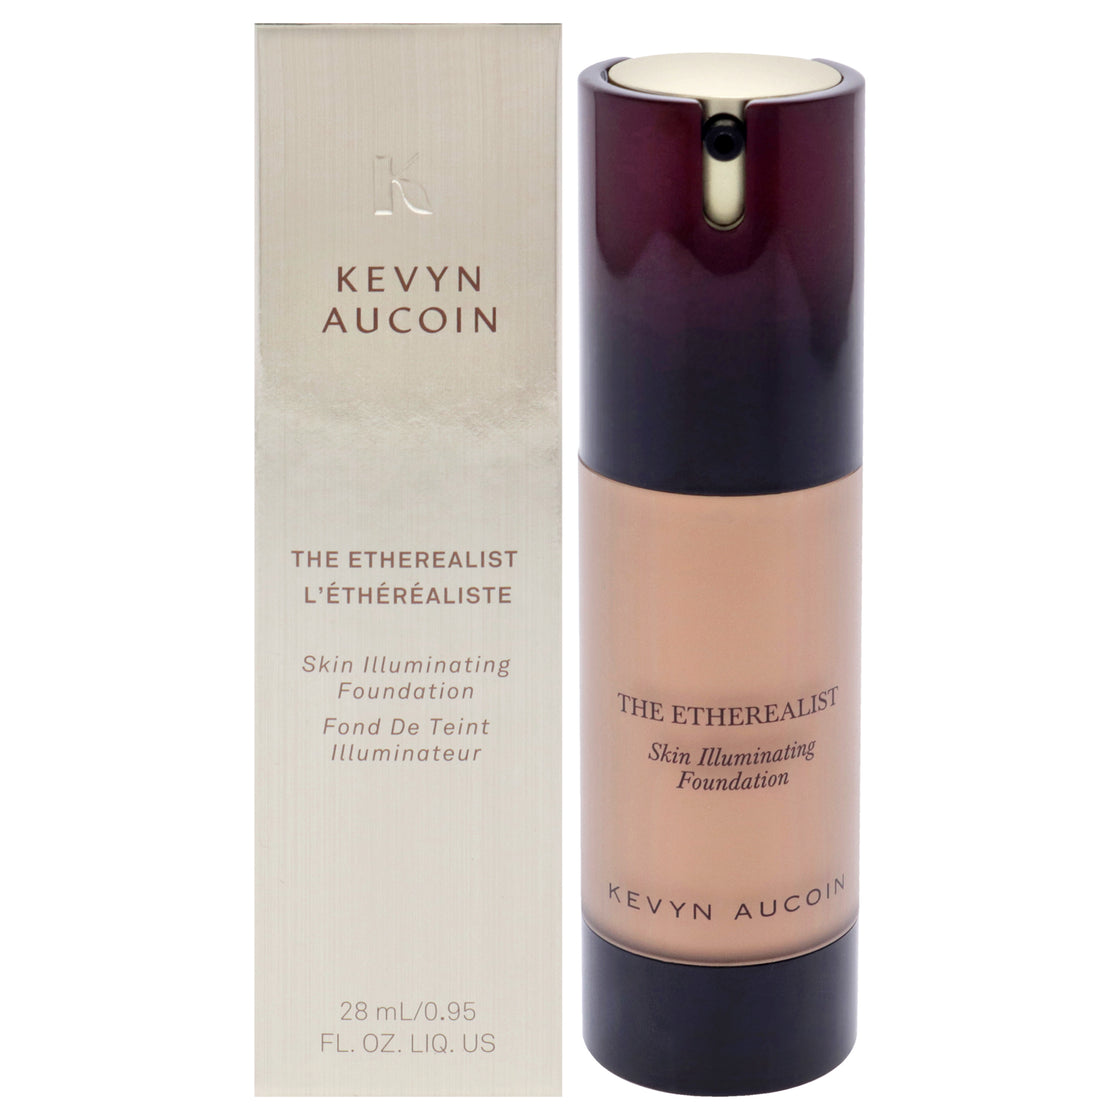 The Etherealist Skin Illuminating Foundation - EF 09 Medium by Kevyn Aucoin for Women - 0.95 oz Foundation